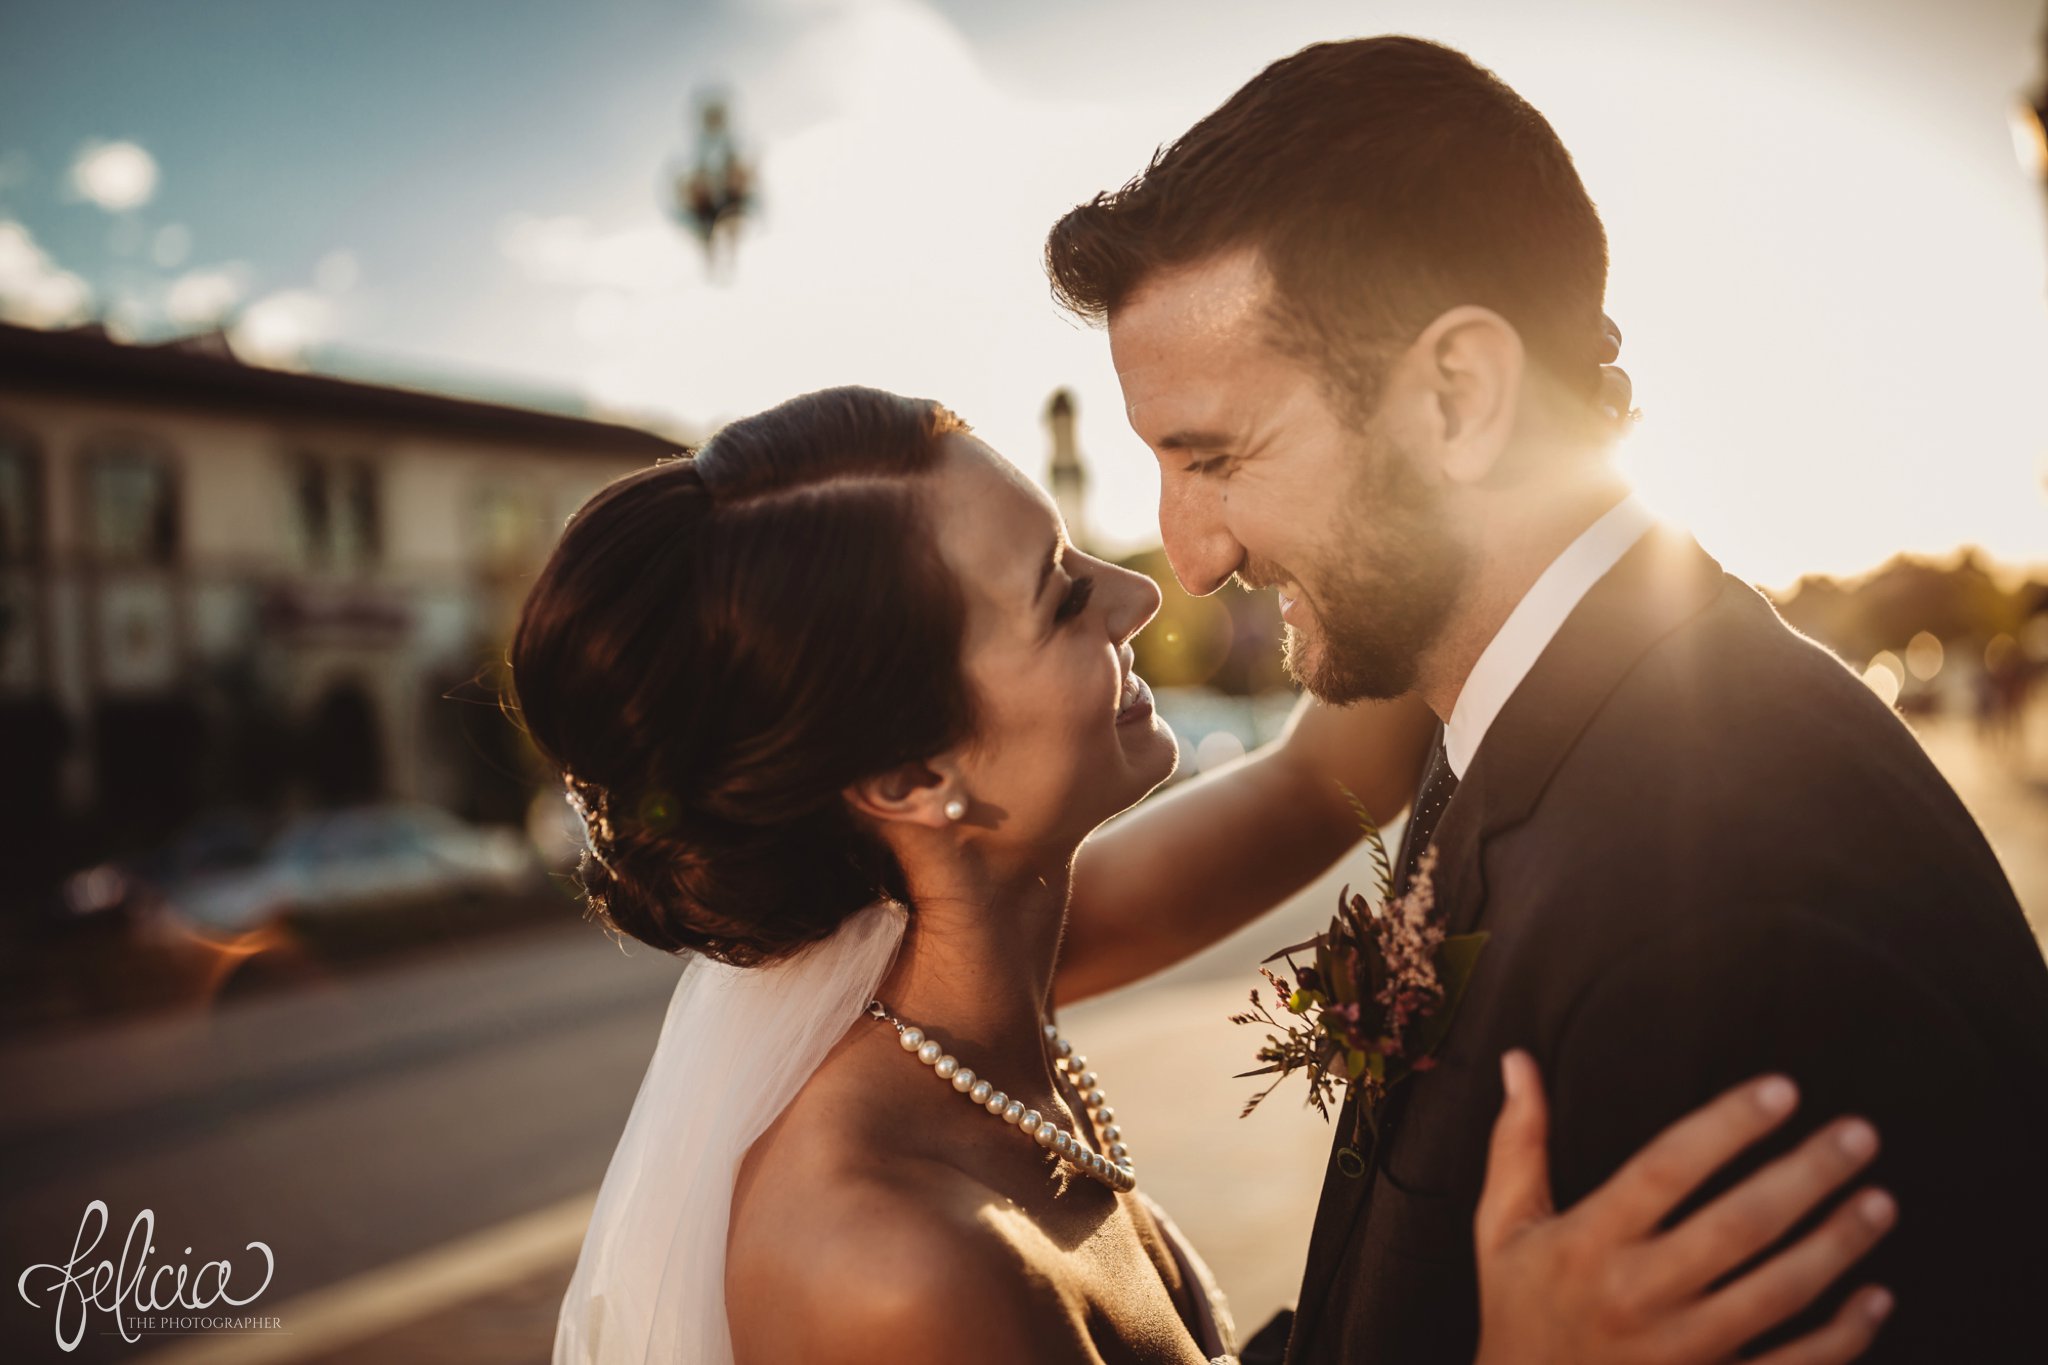 images by feliciathephotographer.com | wedding photographer | kansas city | portrait | bride and groom | romantic | golden hour | sunset | joy | classic | pearls | 